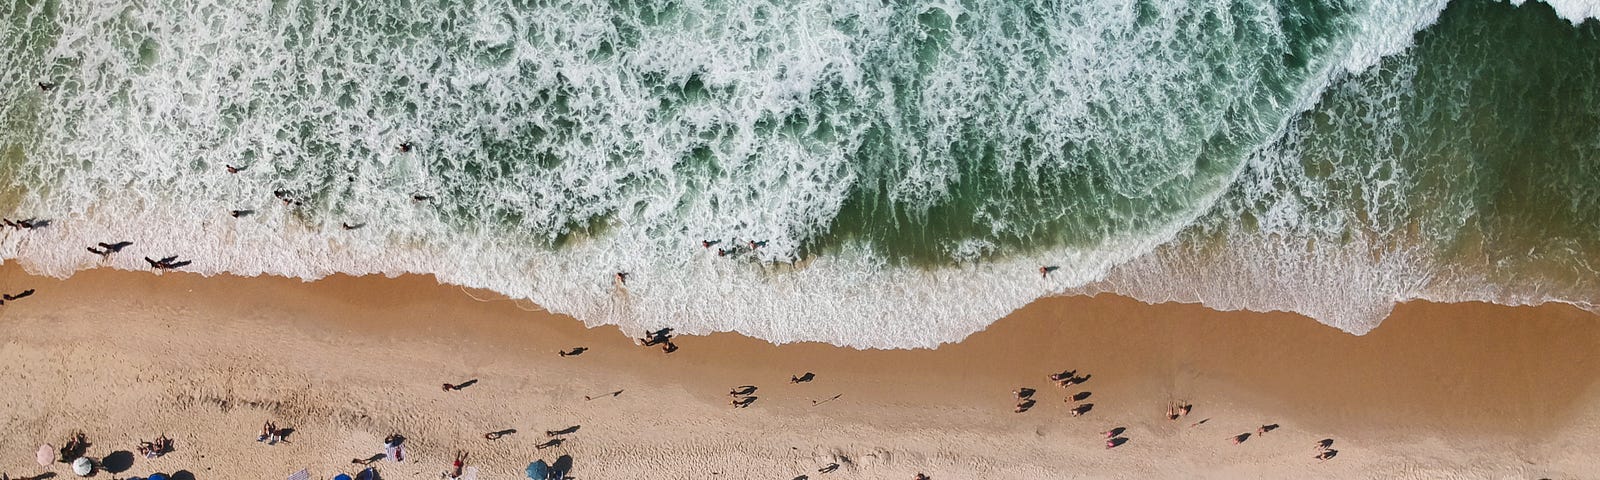 Umbrellas crowding a European beach